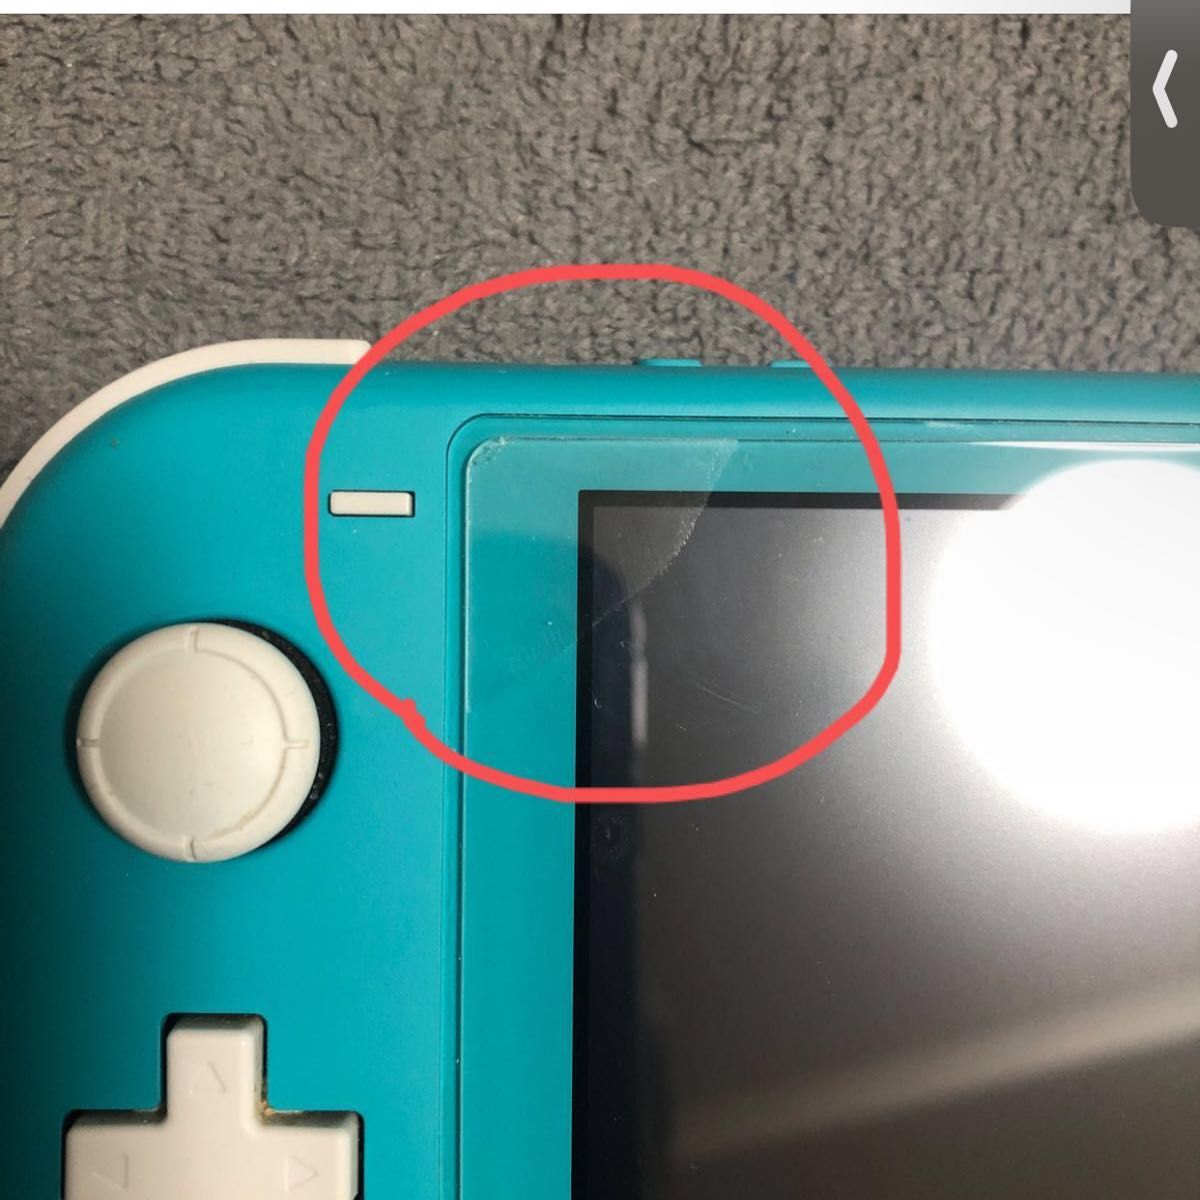 Nintendo Switch liteターコイズ　microSDカード付属無し　